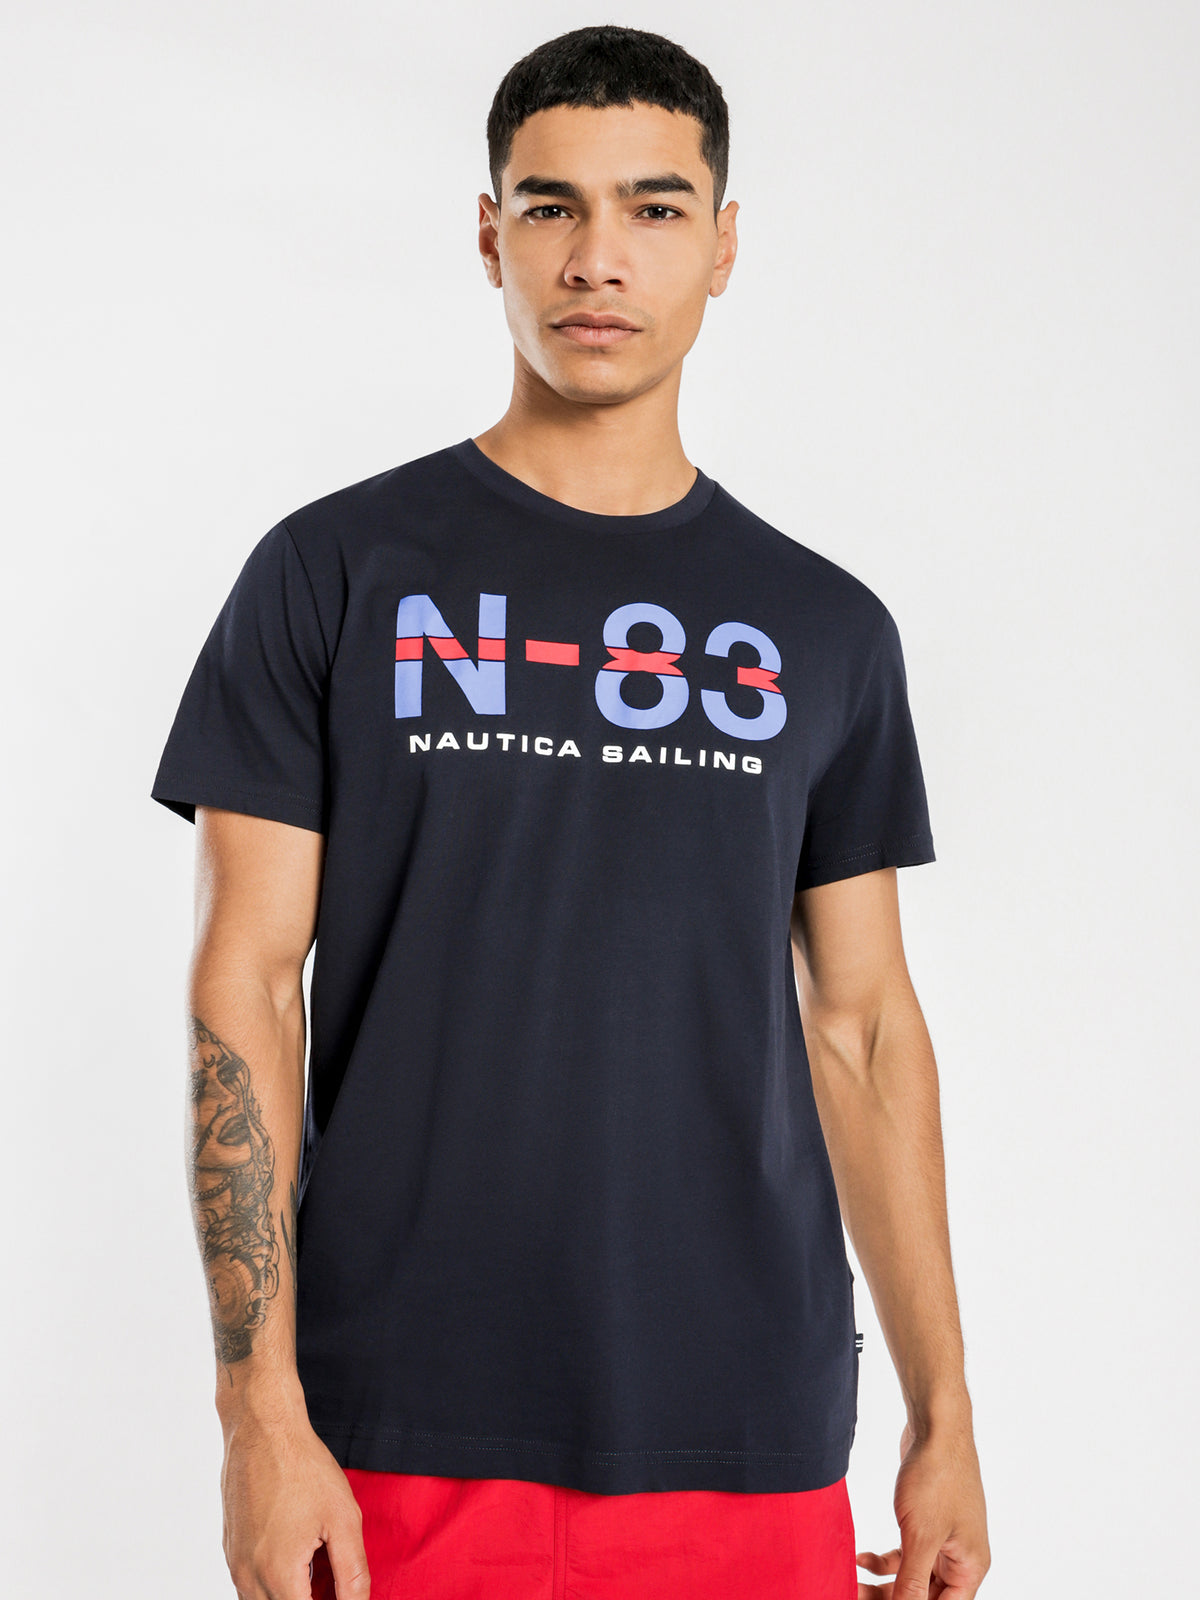 N-83 T-Shirt in Navy